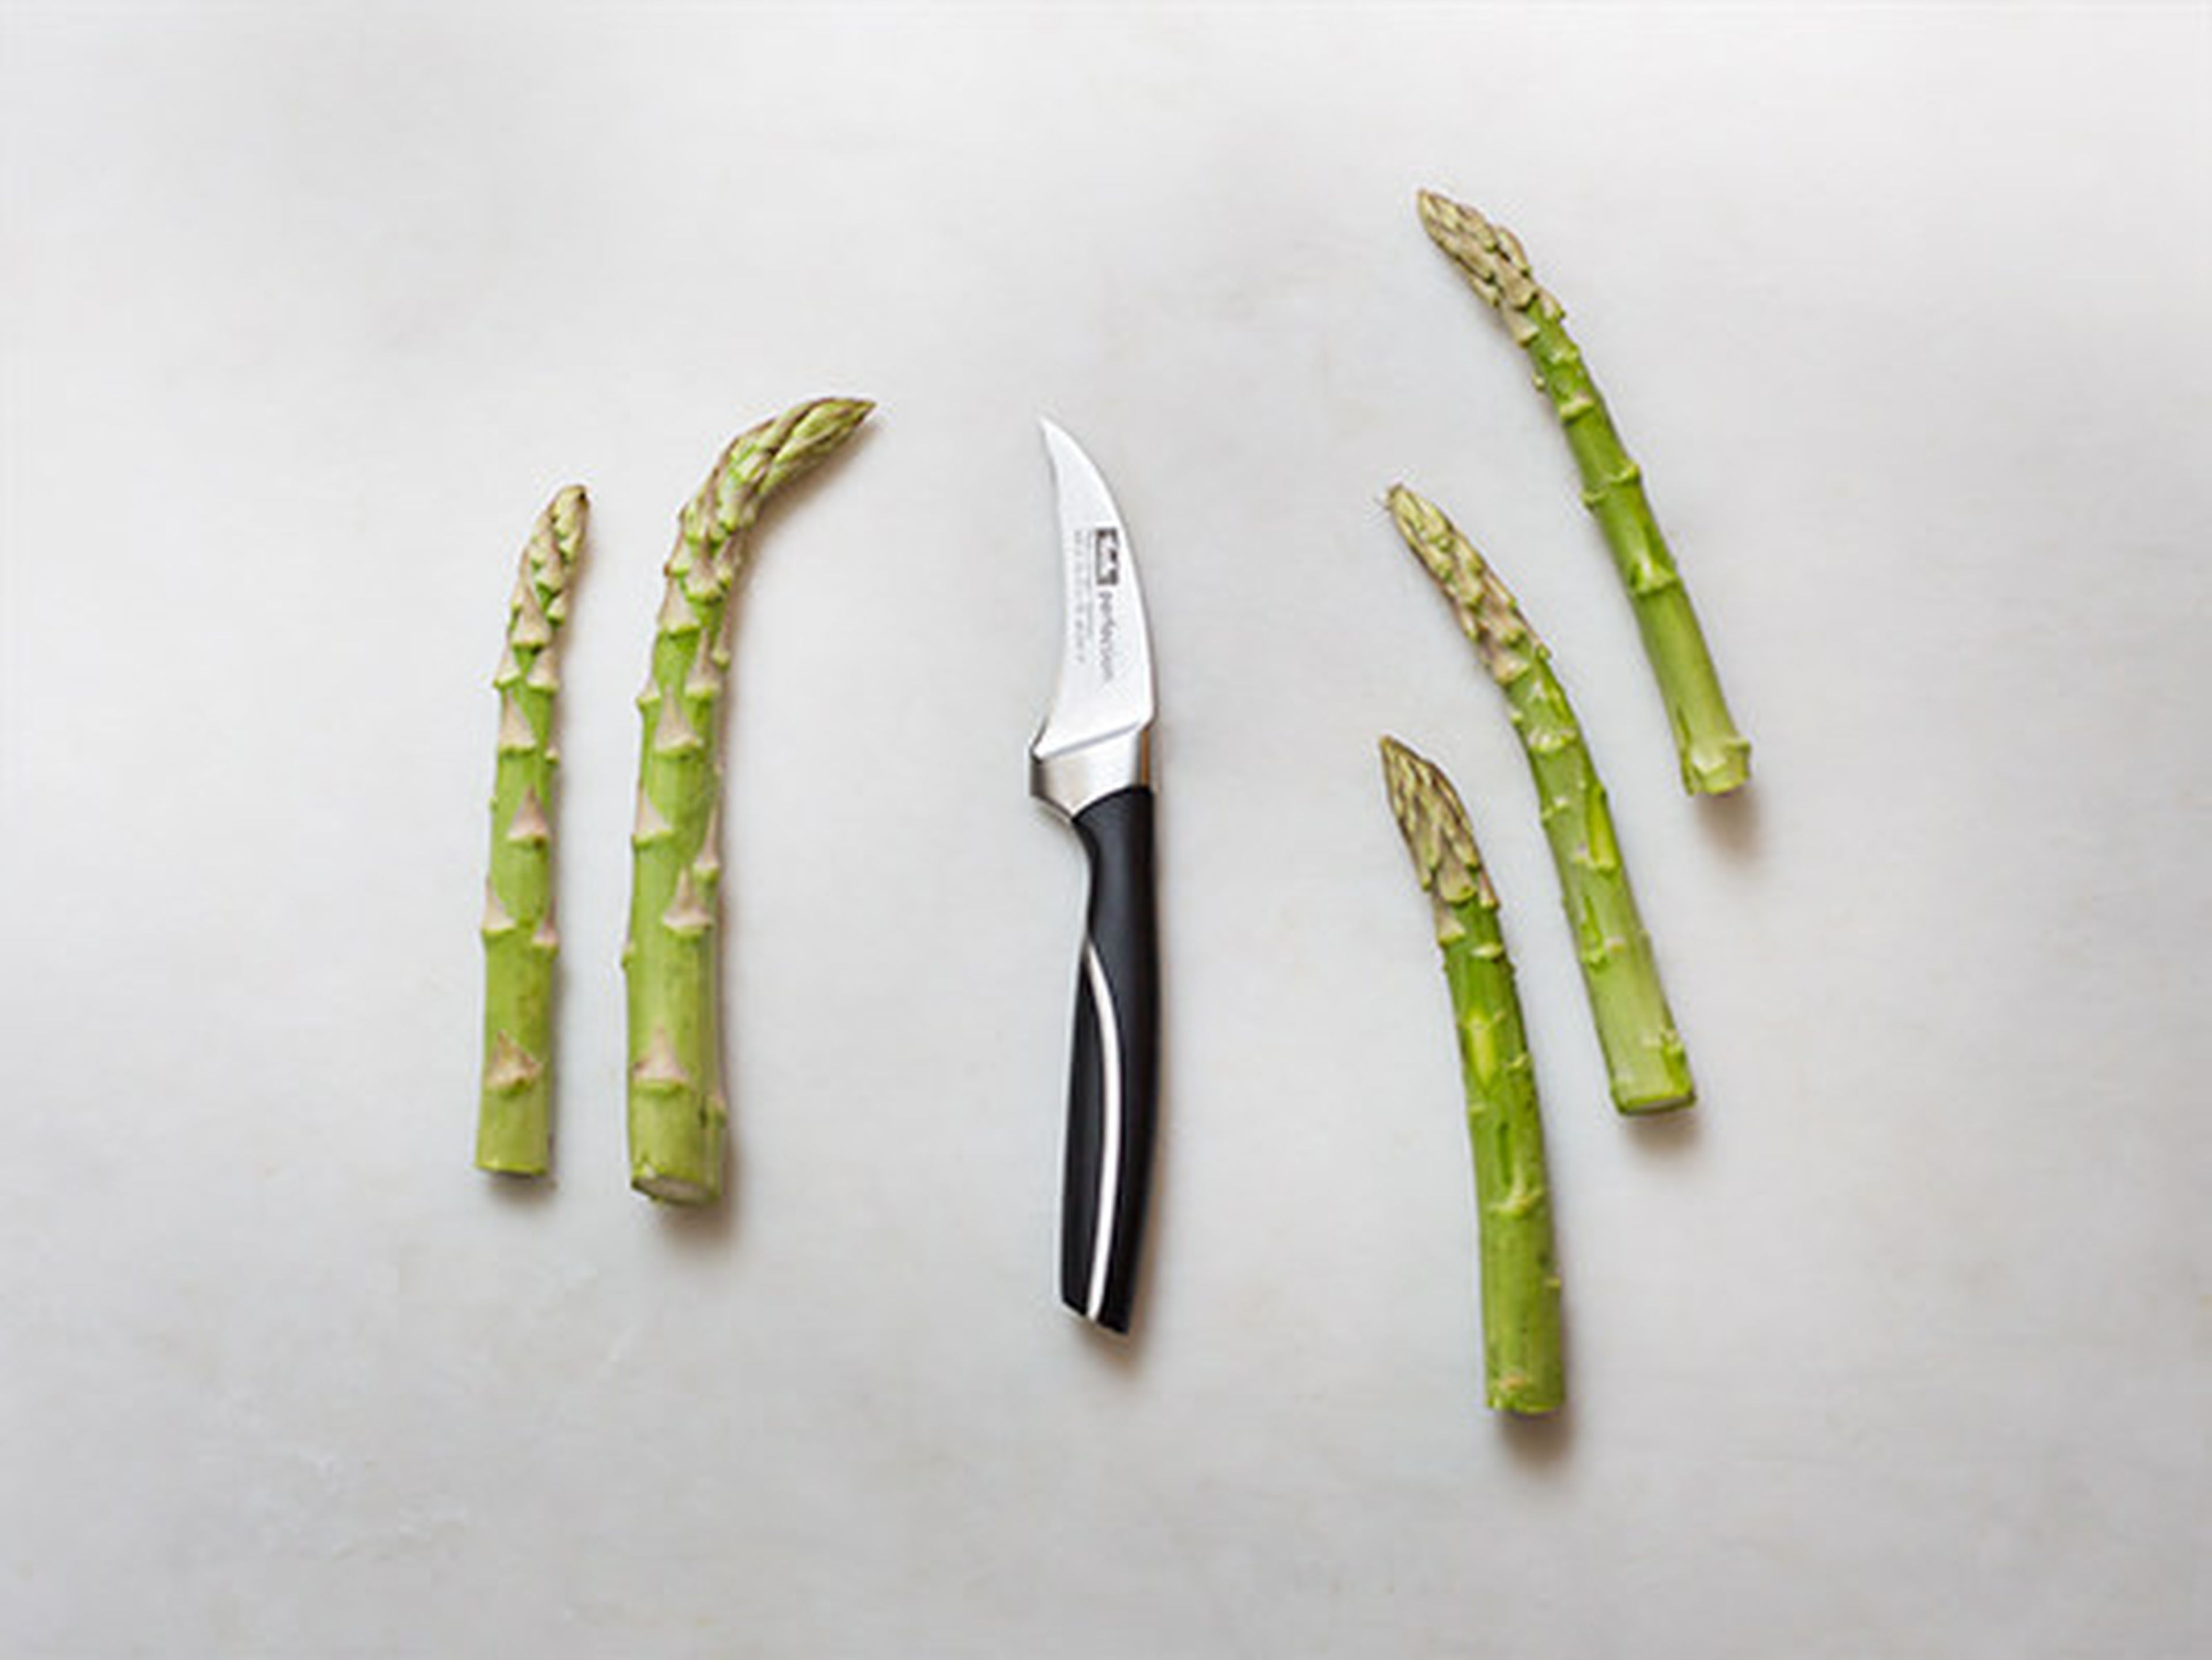 How to prepare green asparagus